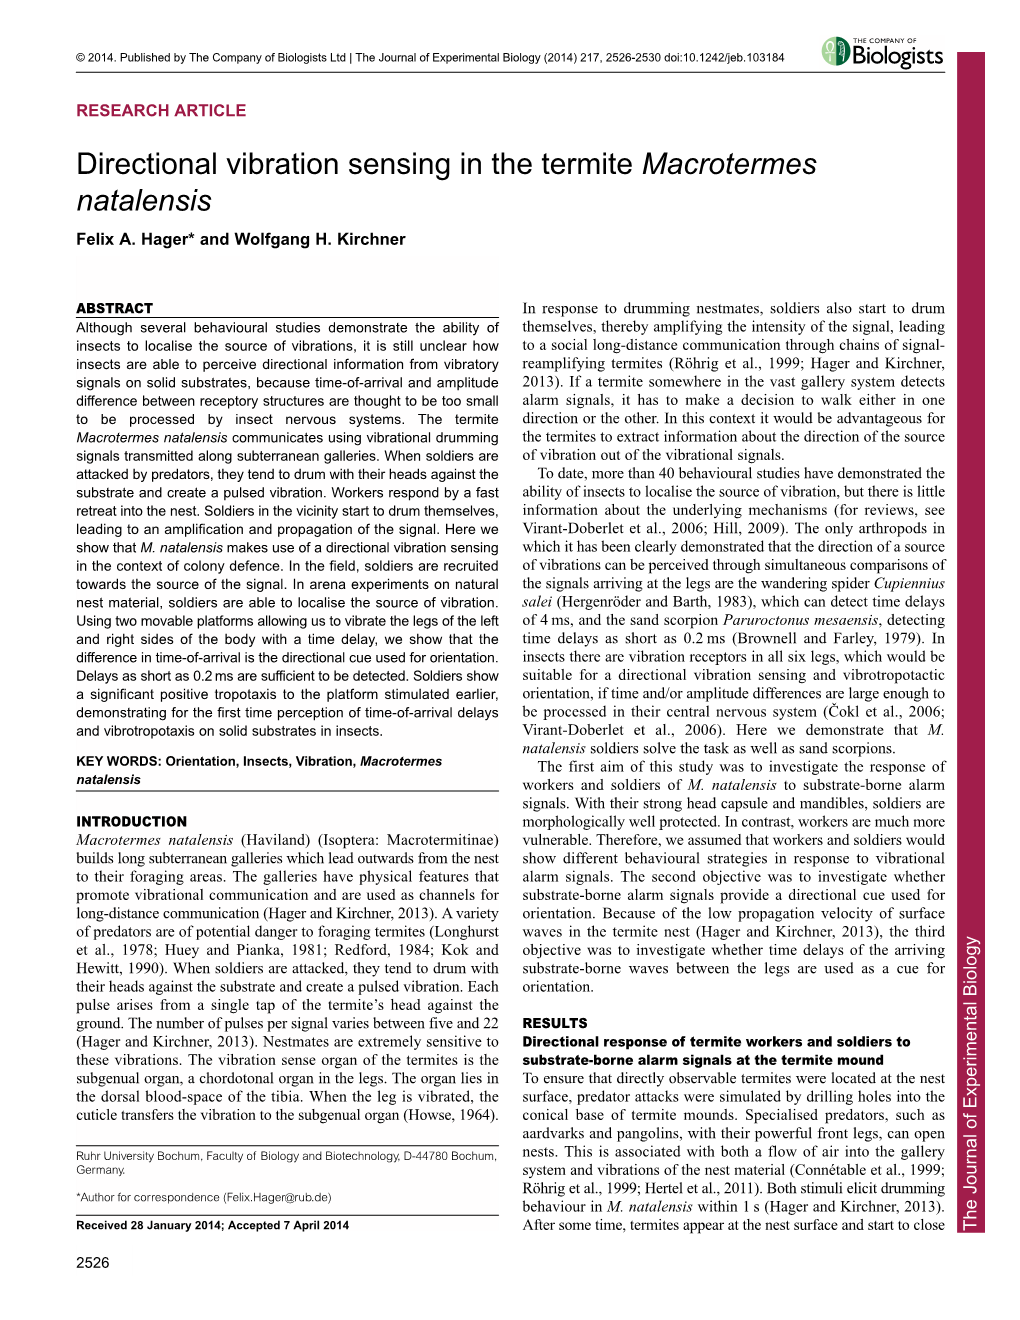 Directional Vibration Sensing in the Termite Macrotermes Natalensis